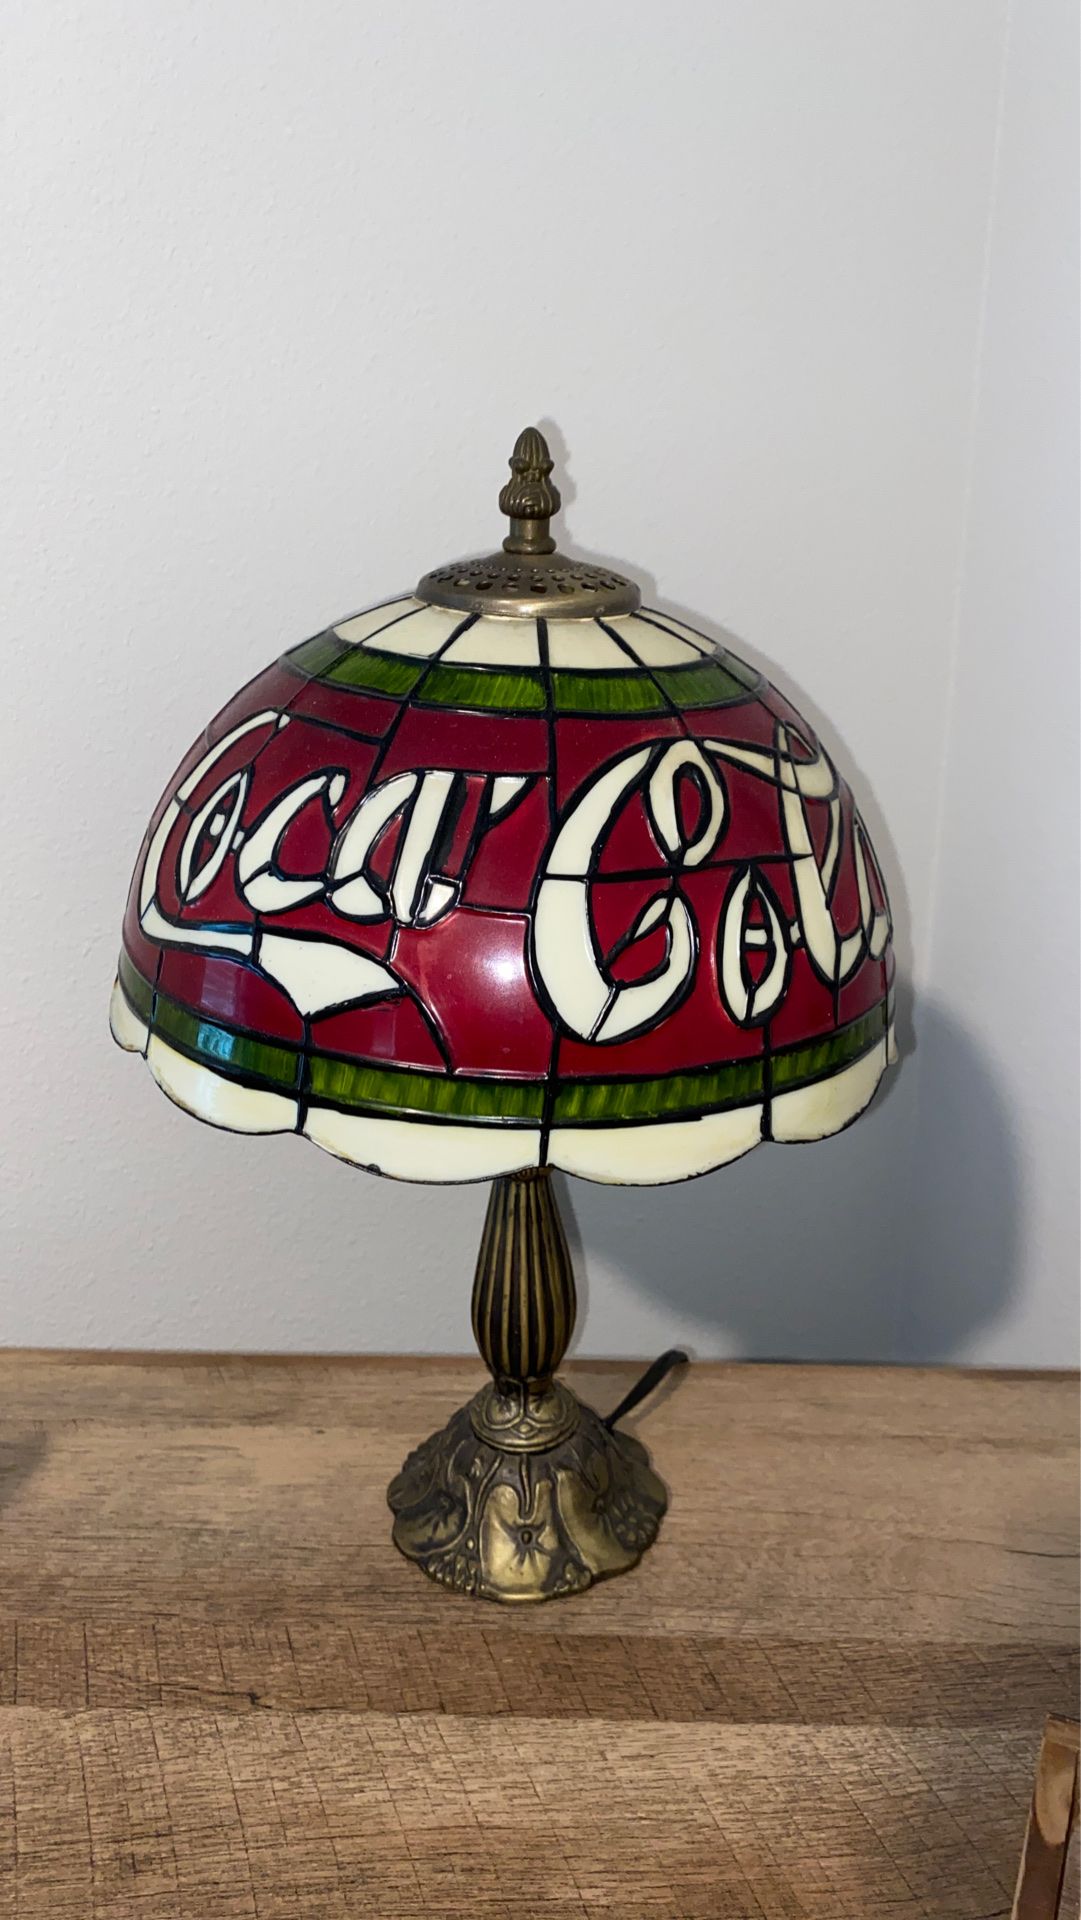 Coca Cola lamp